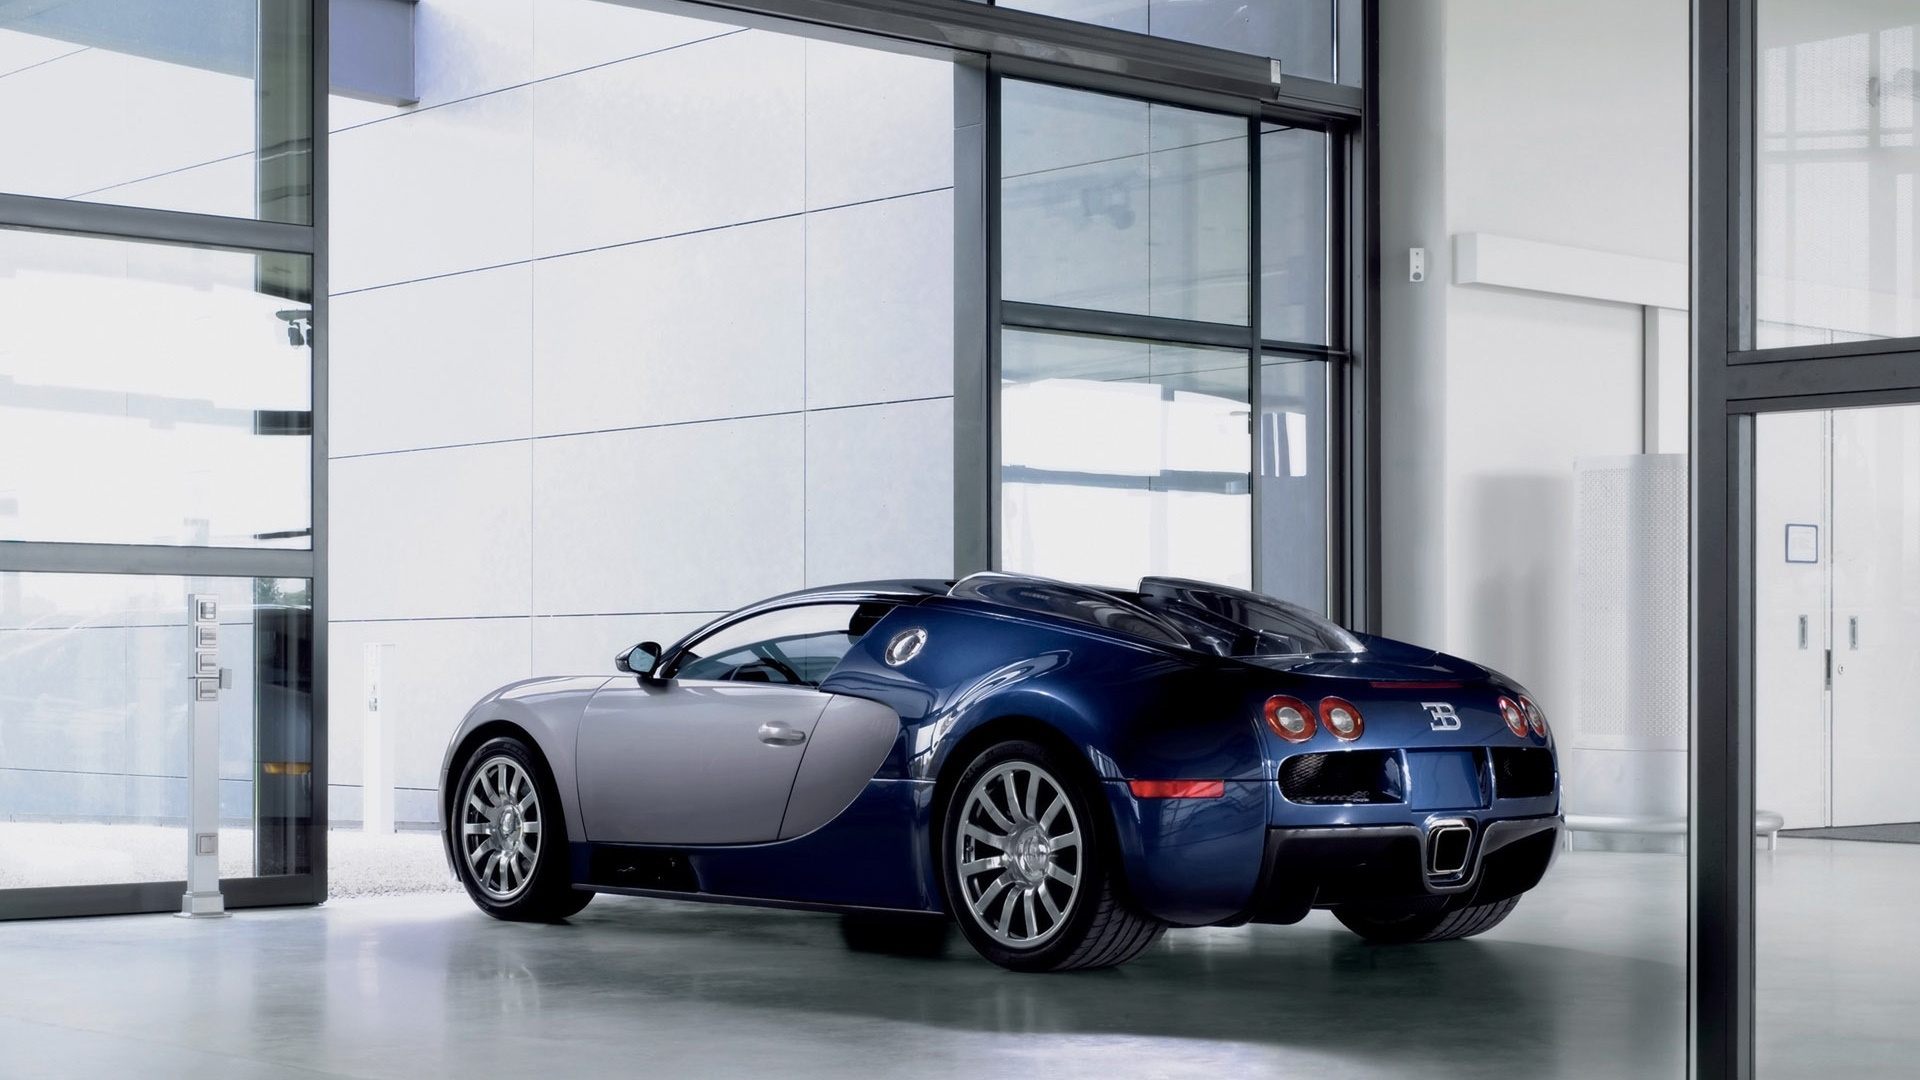 Bugatti Veyron 2006 - Workshop in Molsheim - Rear Angle for 1920 x 1080 HDTV 1080p resolution